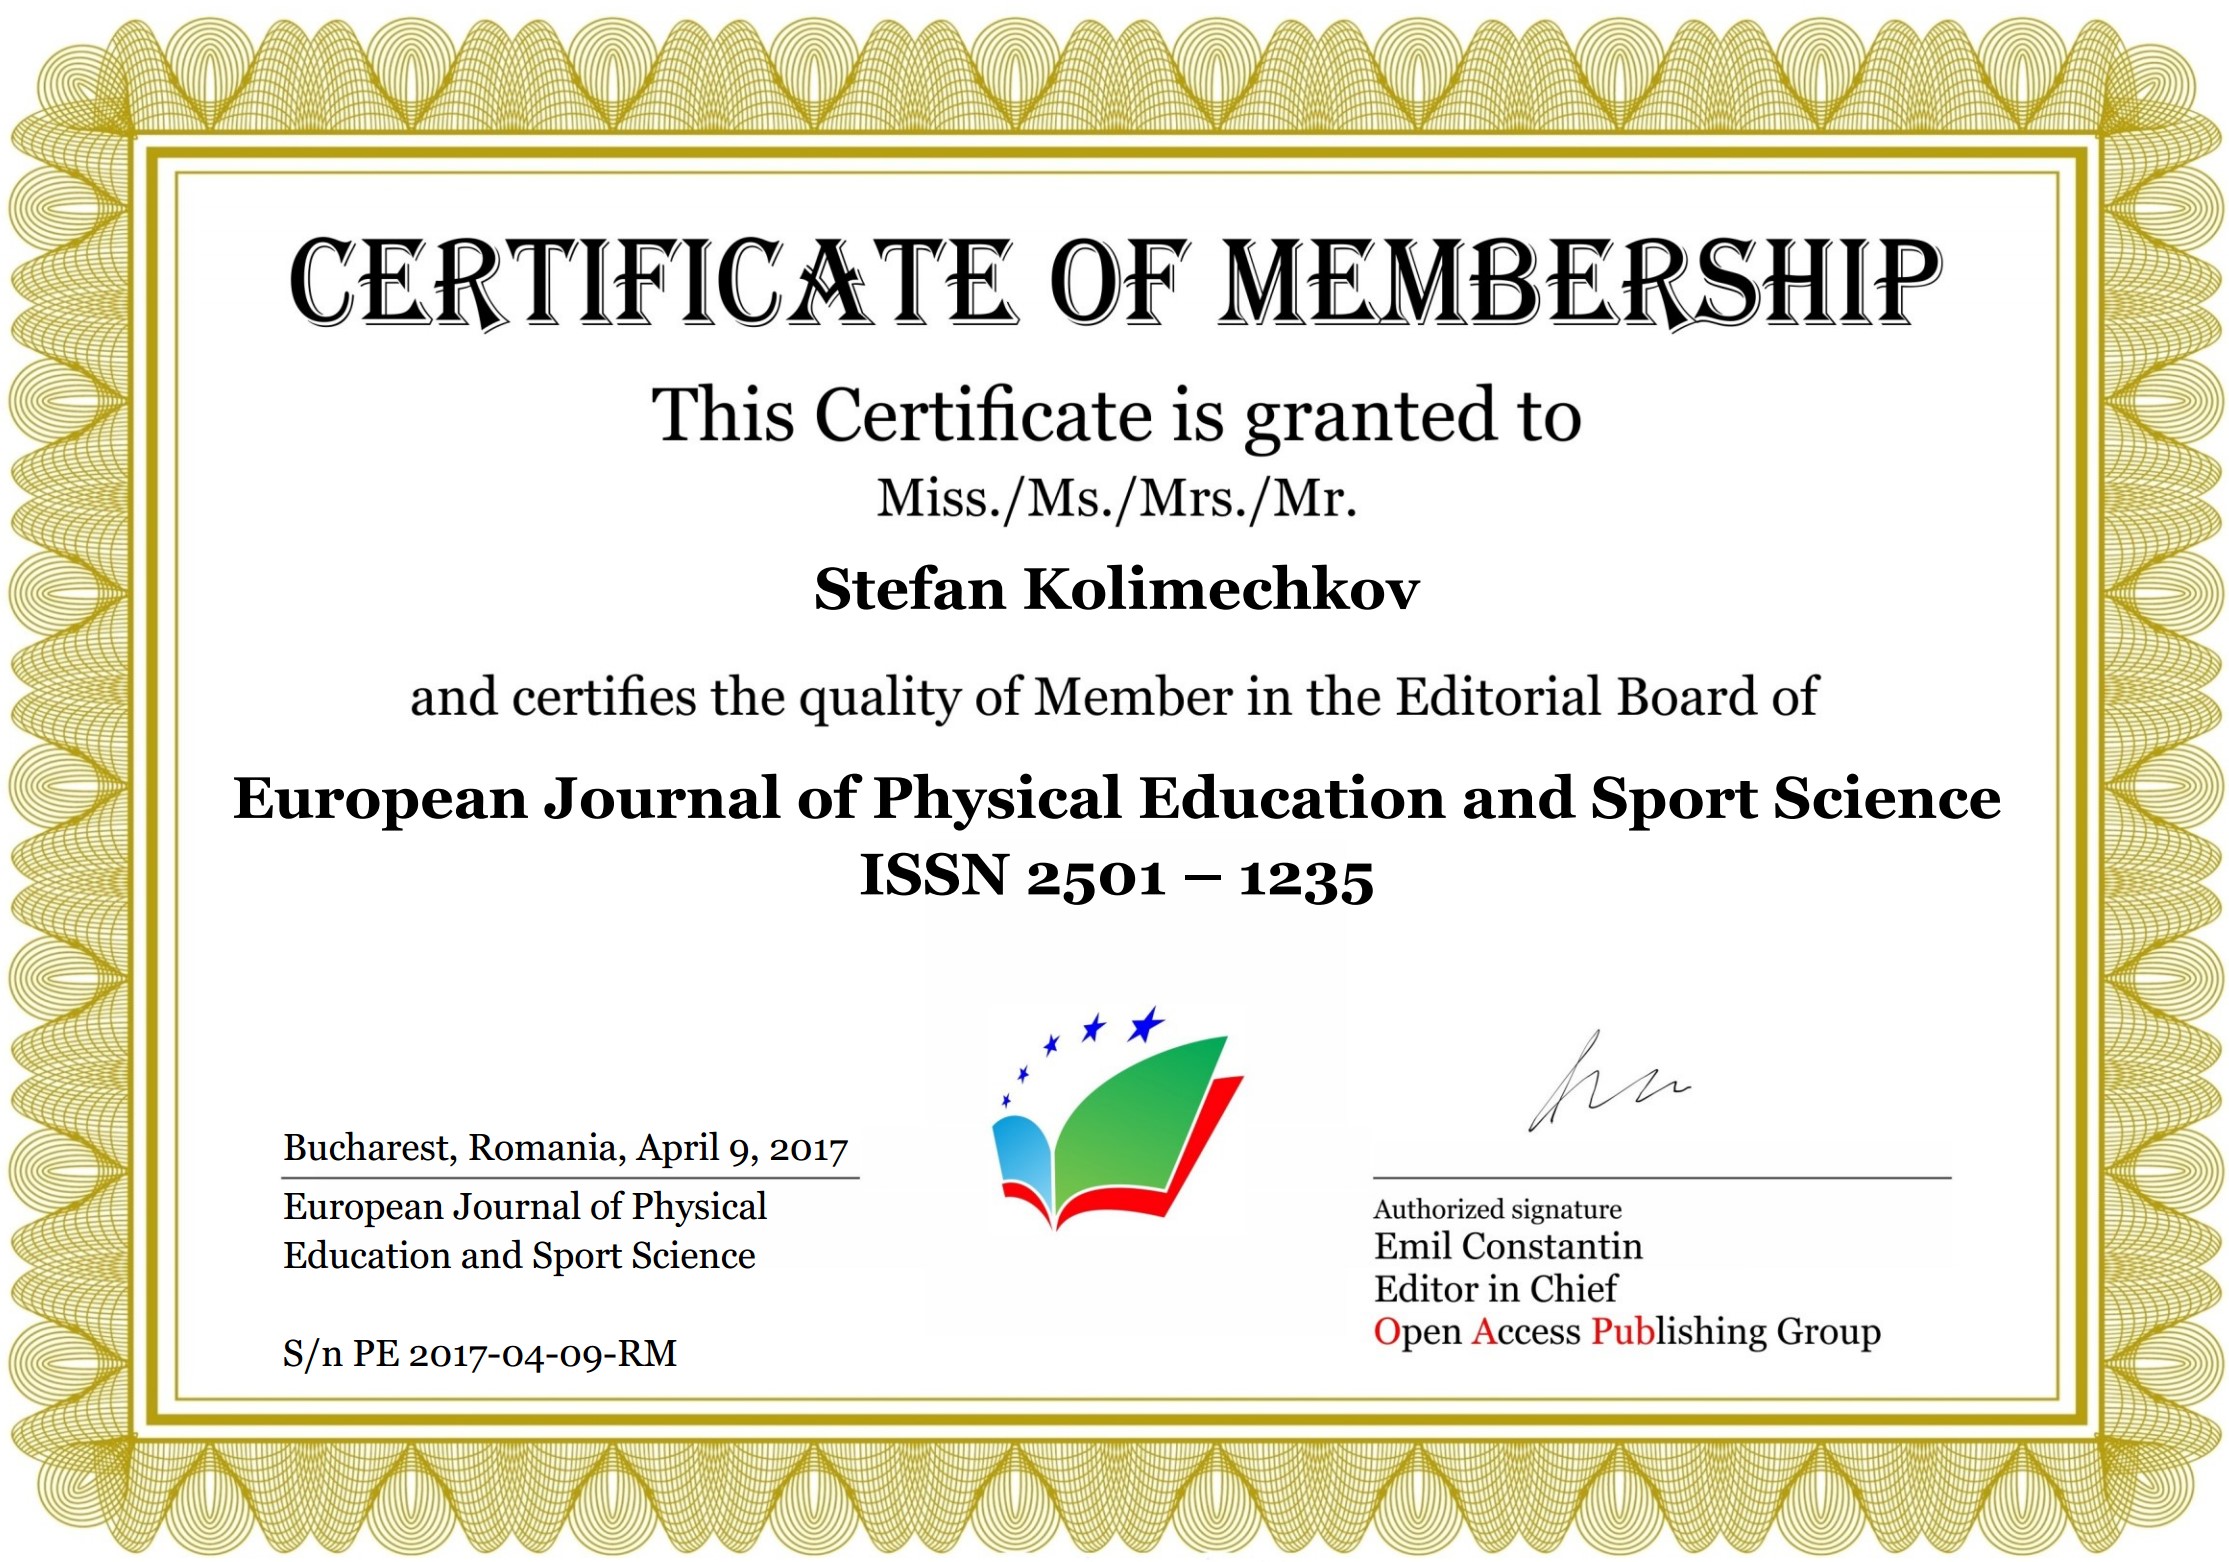 Stefan Kolimechkov - International Advisory Board of the European Journal of Physical Education and Sport Science